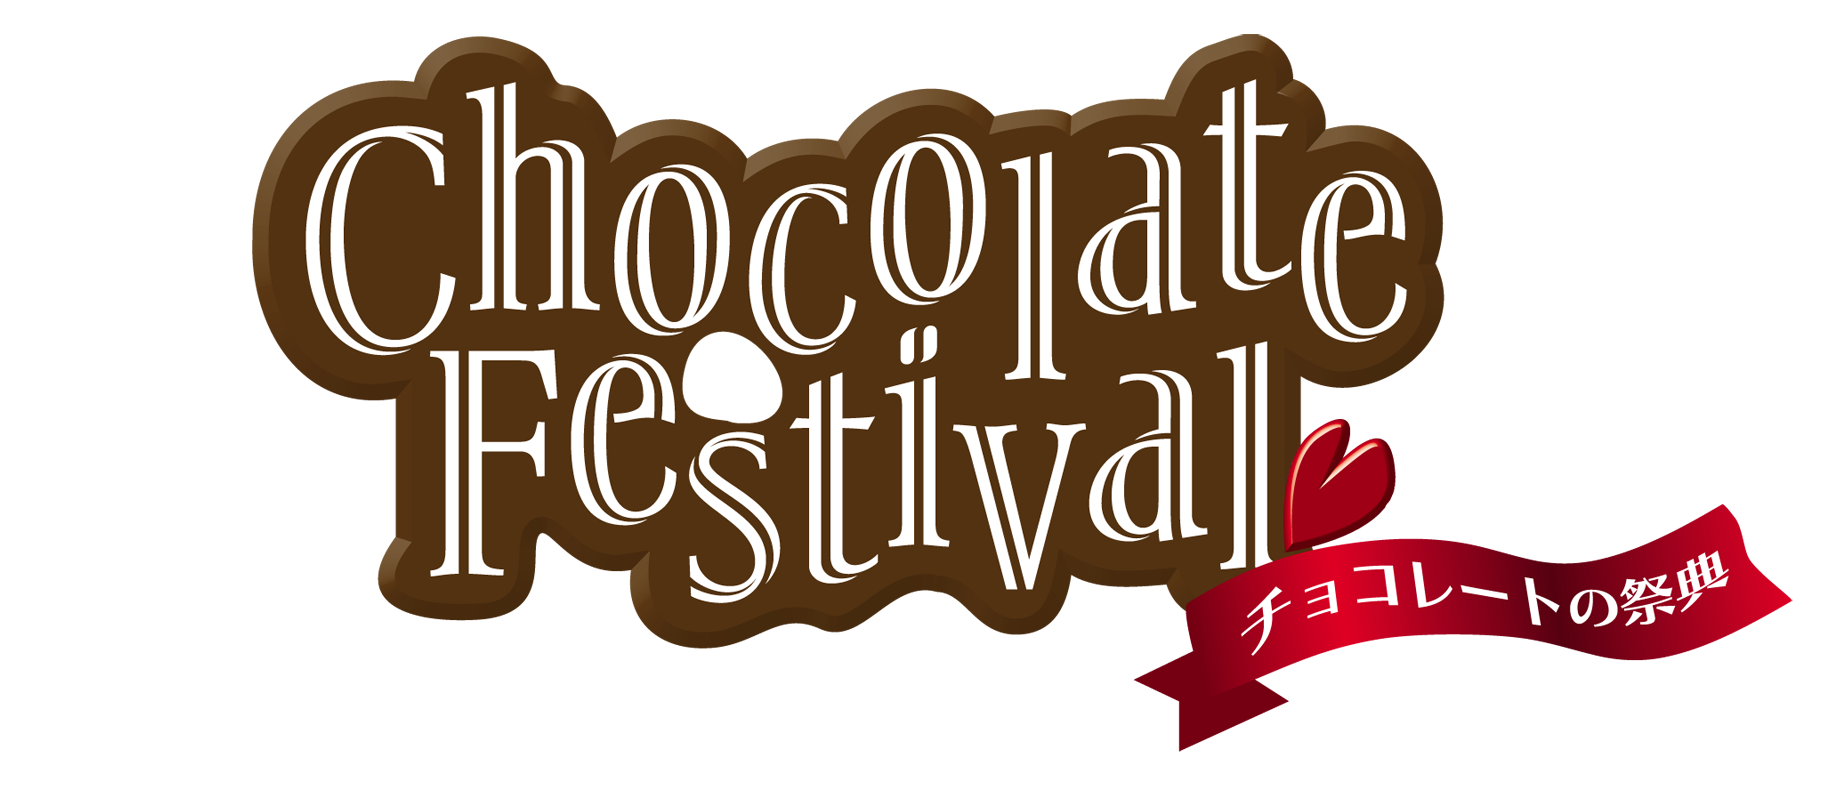 CHOCOLATE FESTIVAL チョコレートの祭典